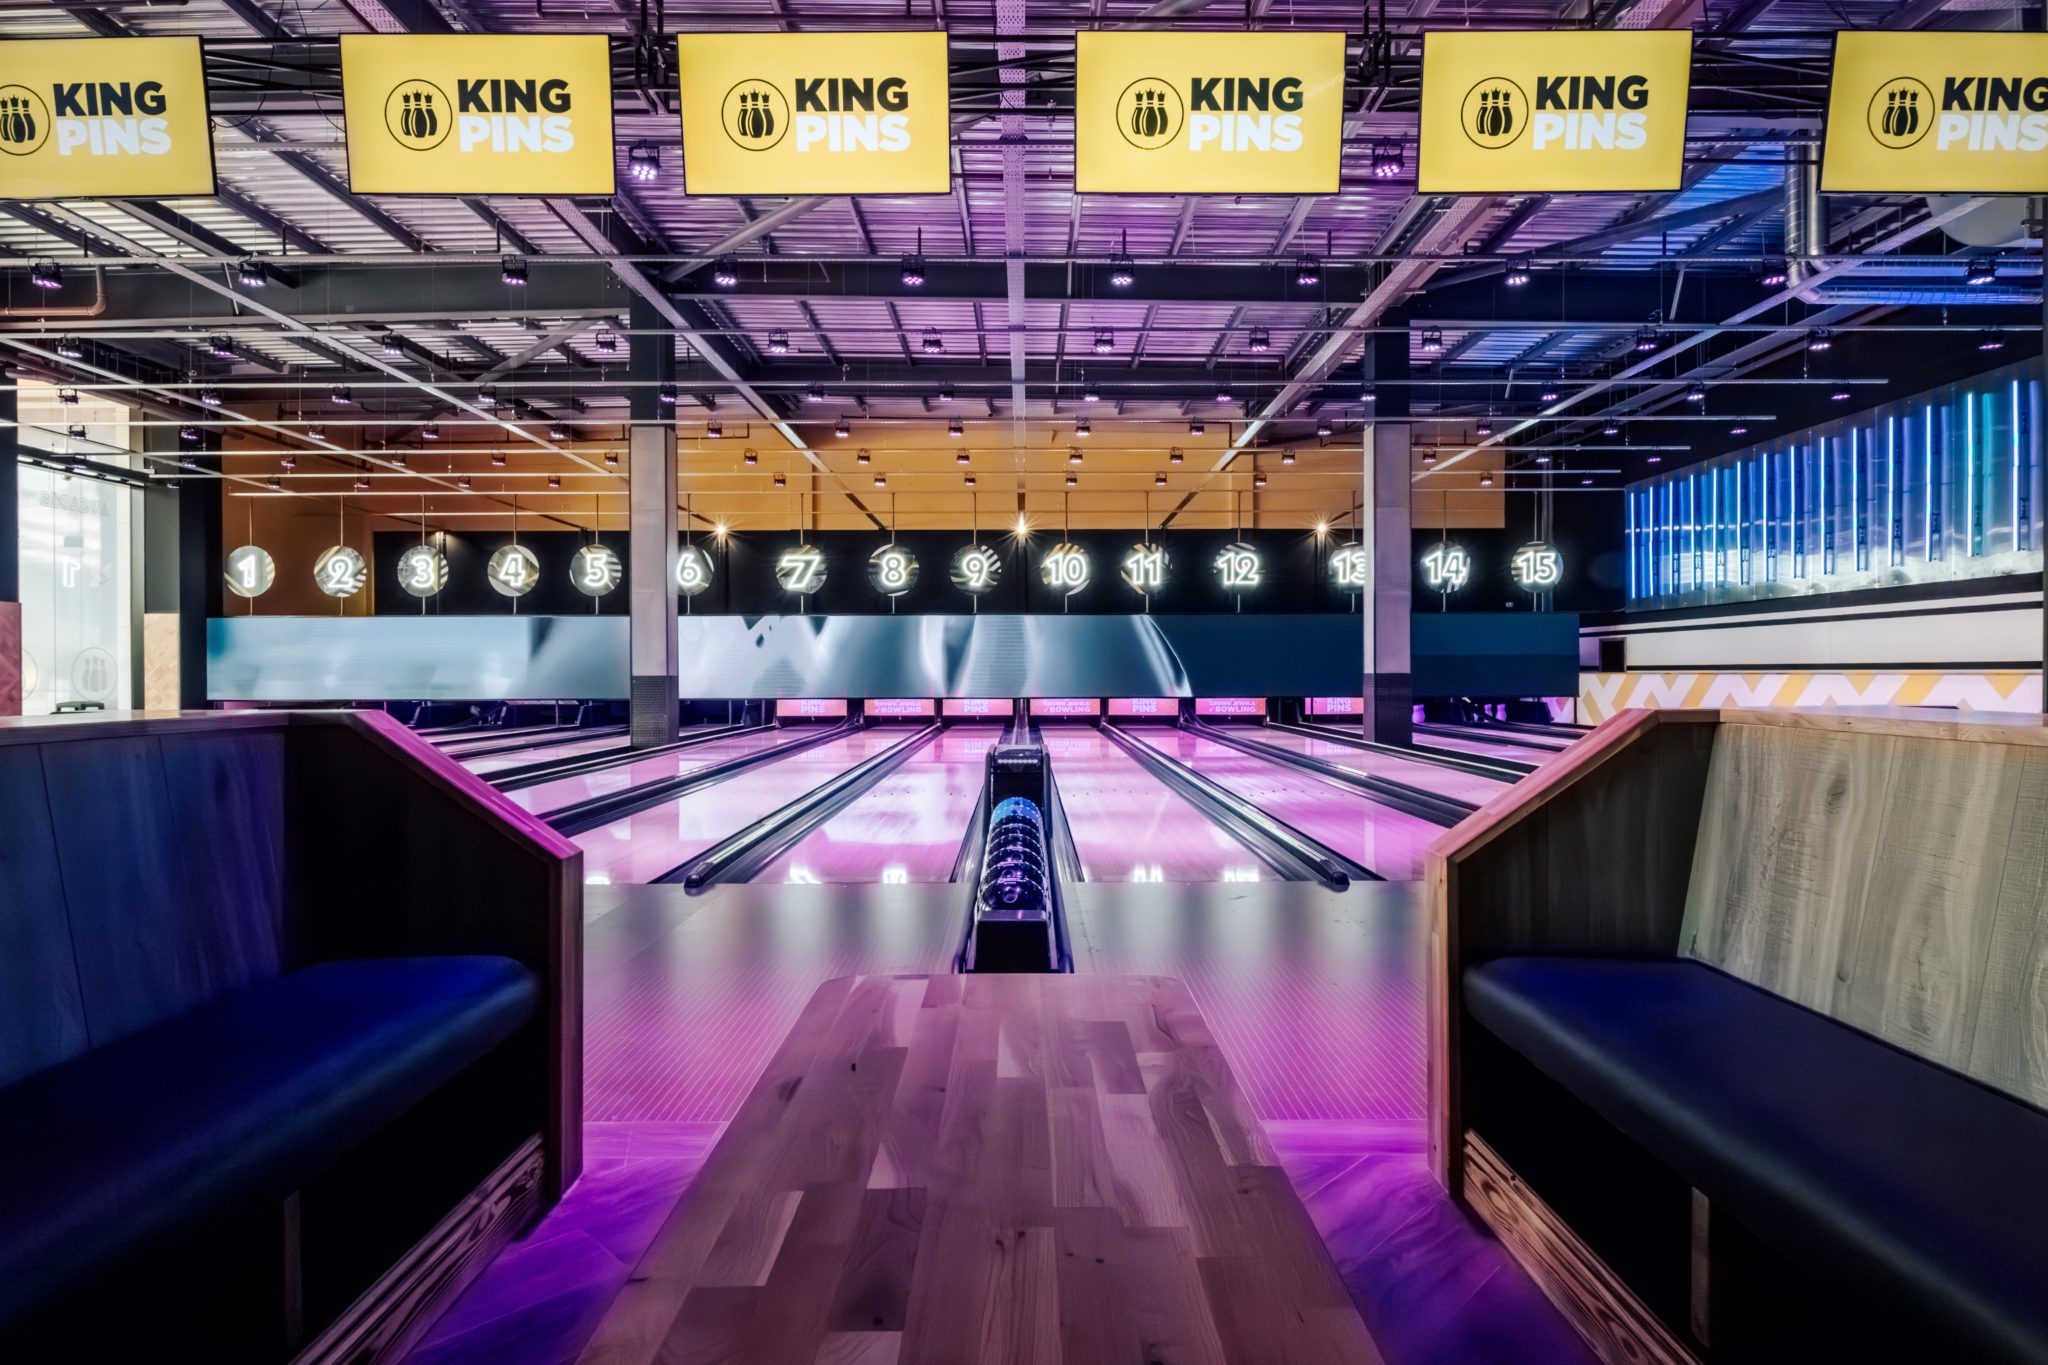 king-pins-bowling-lanes